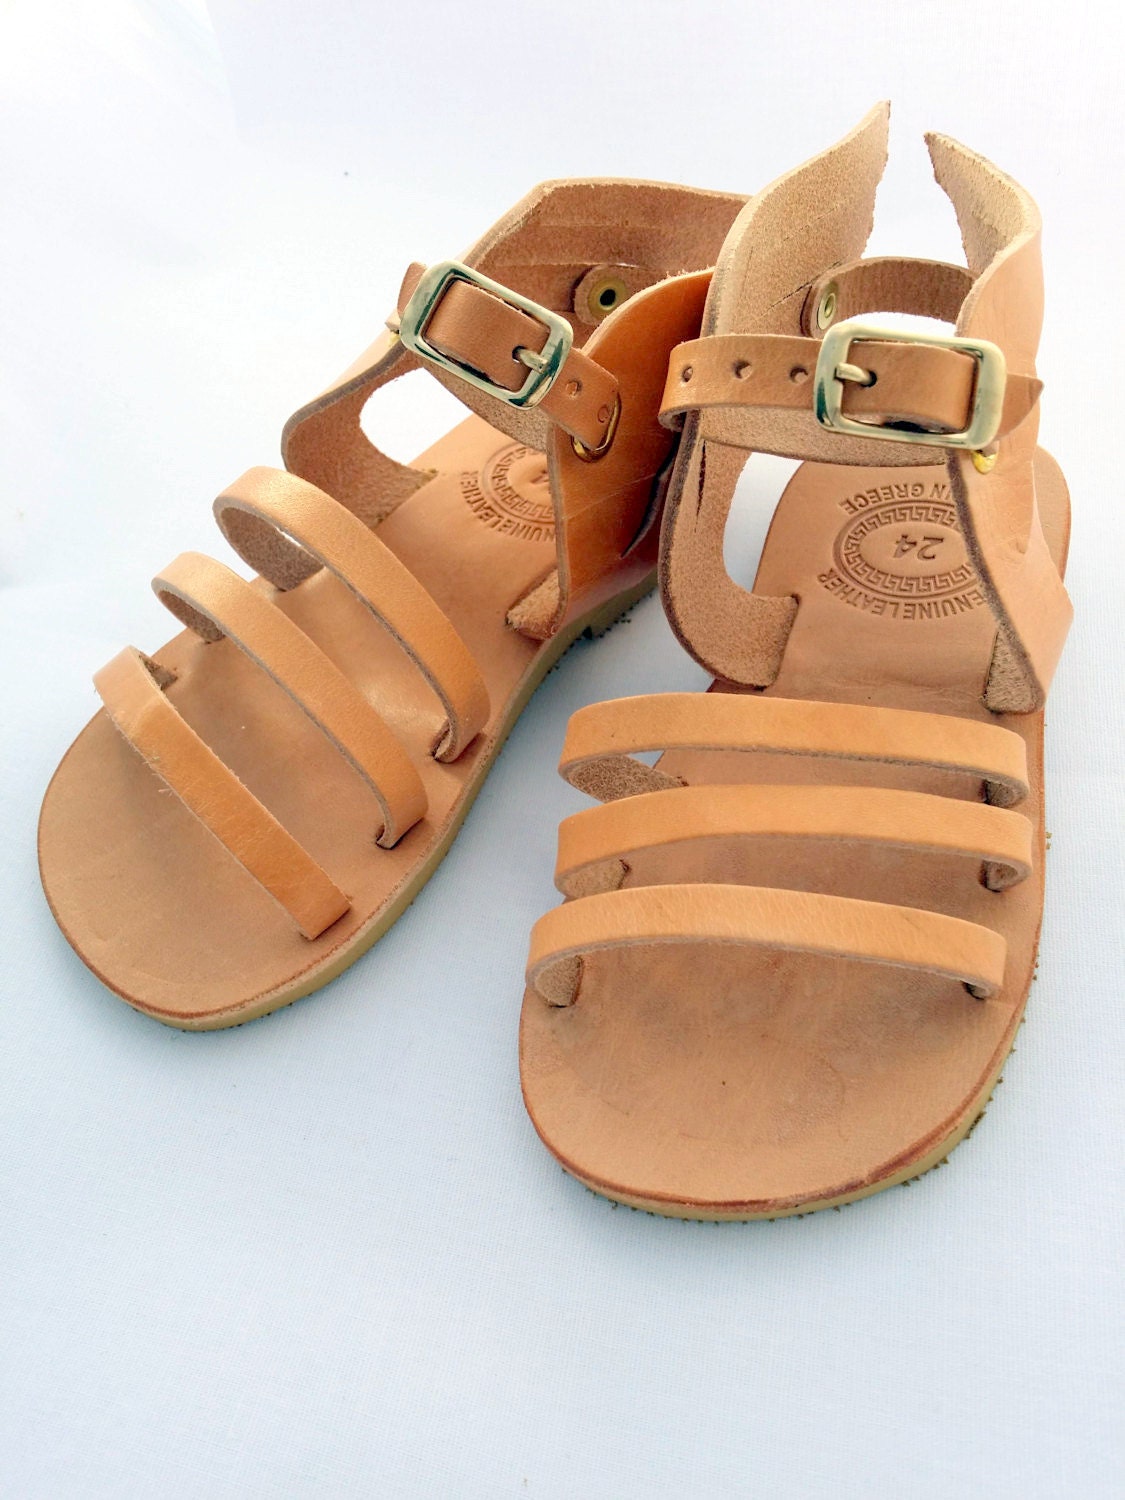 Hermes design kids Sandals handmade Greek Children Sandals